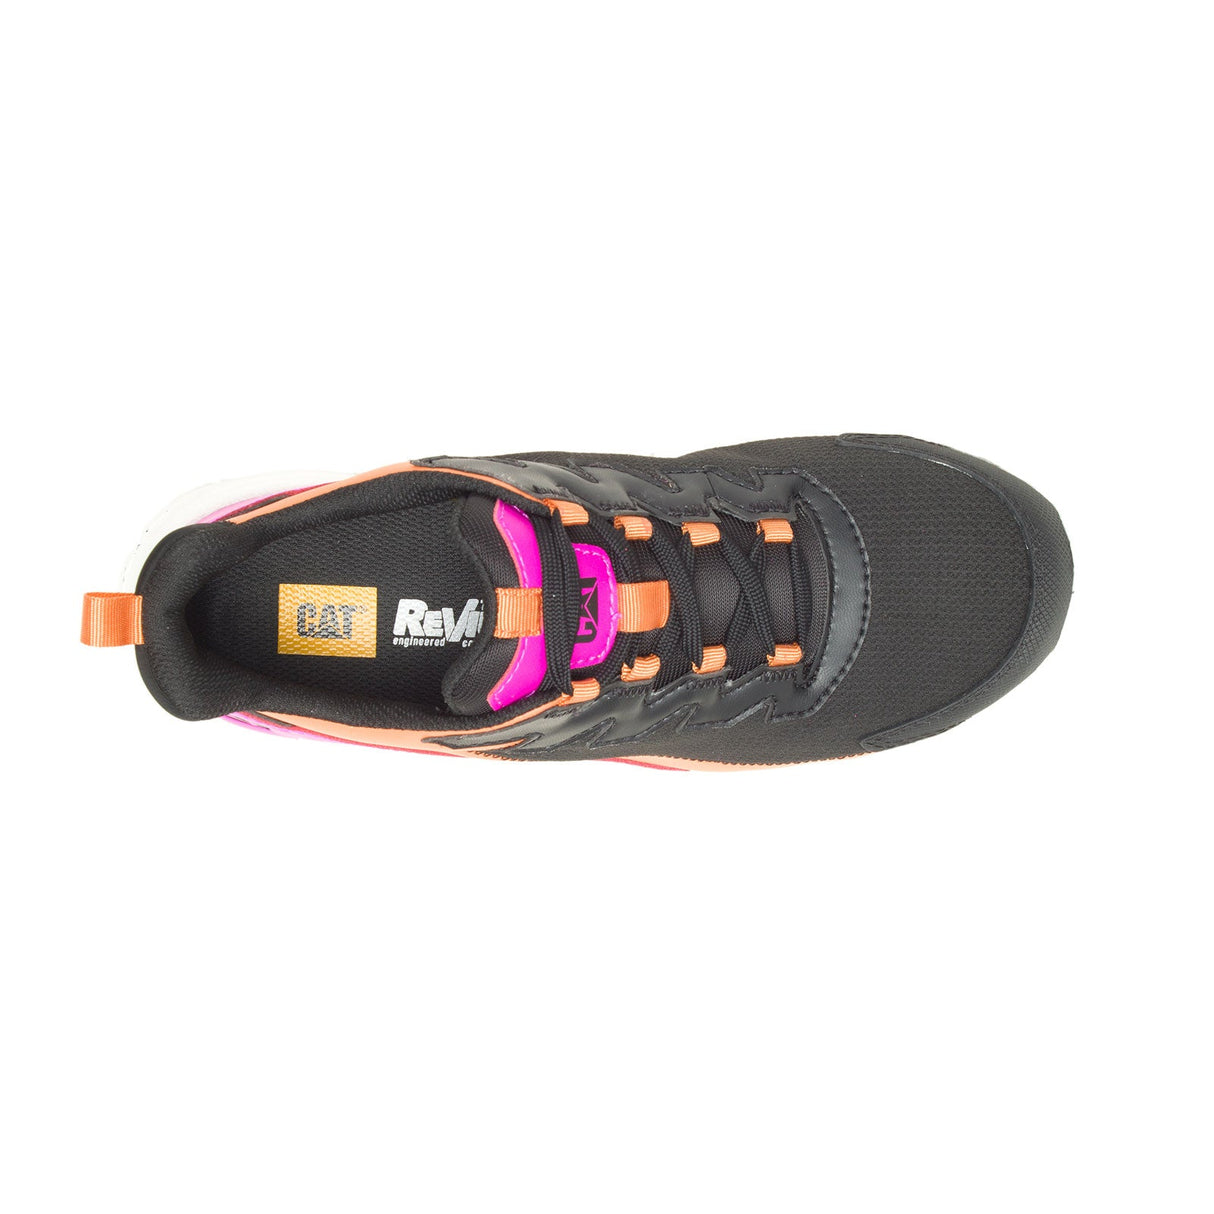 Caterpillar Streamline Runner Women's Composite-Toe Work Shoes P91495-7